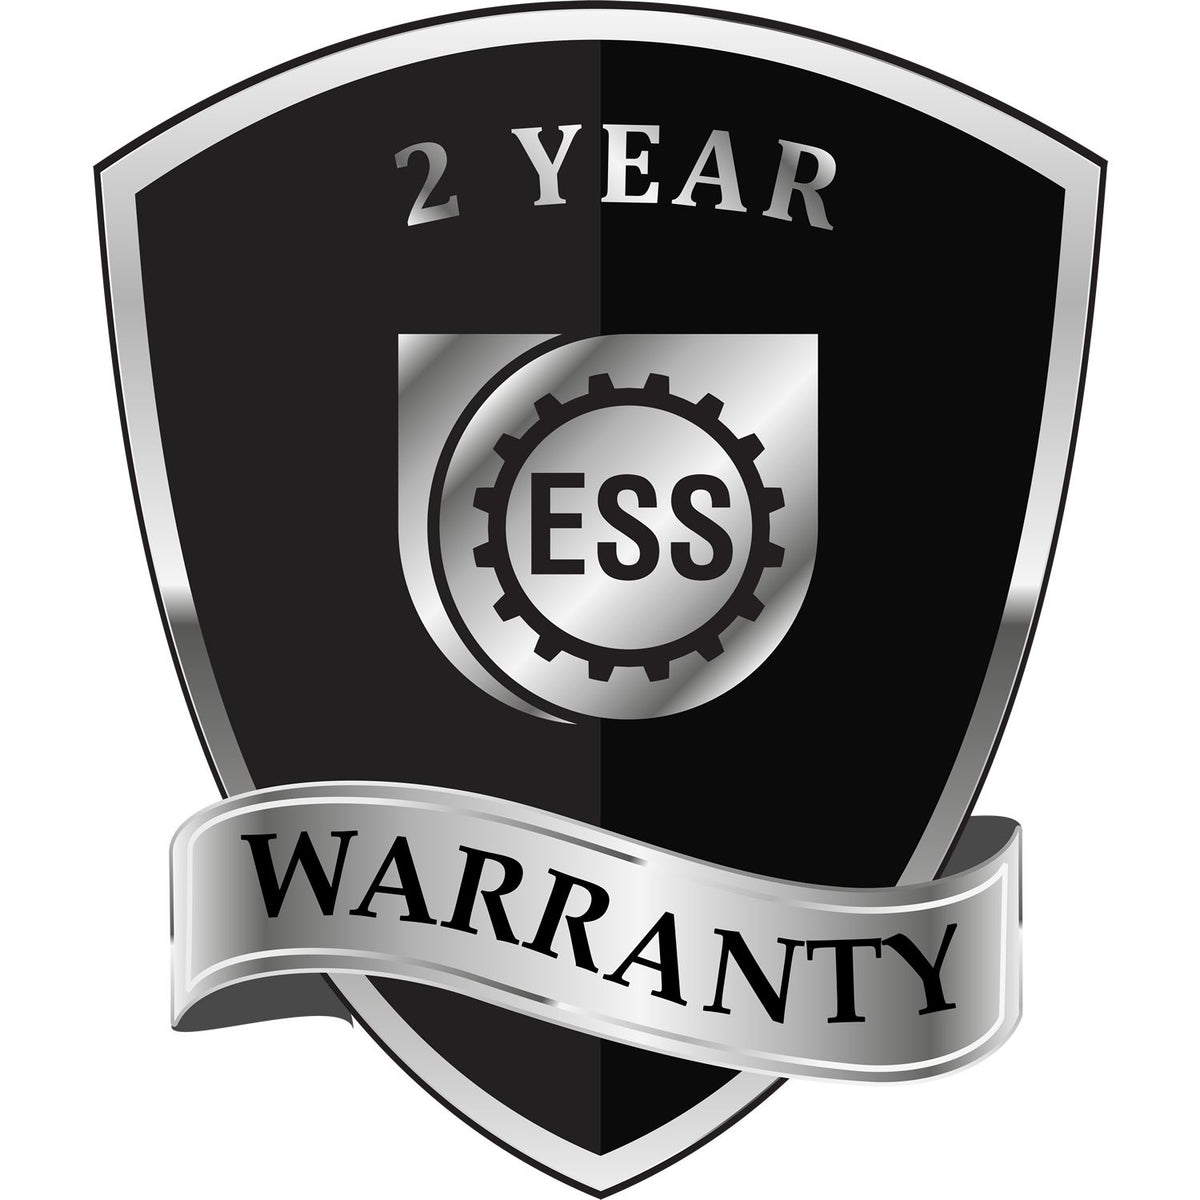 A badge or emblem showing a warranty icon for the Soft Pocket Washington Landscape Architect Embosser